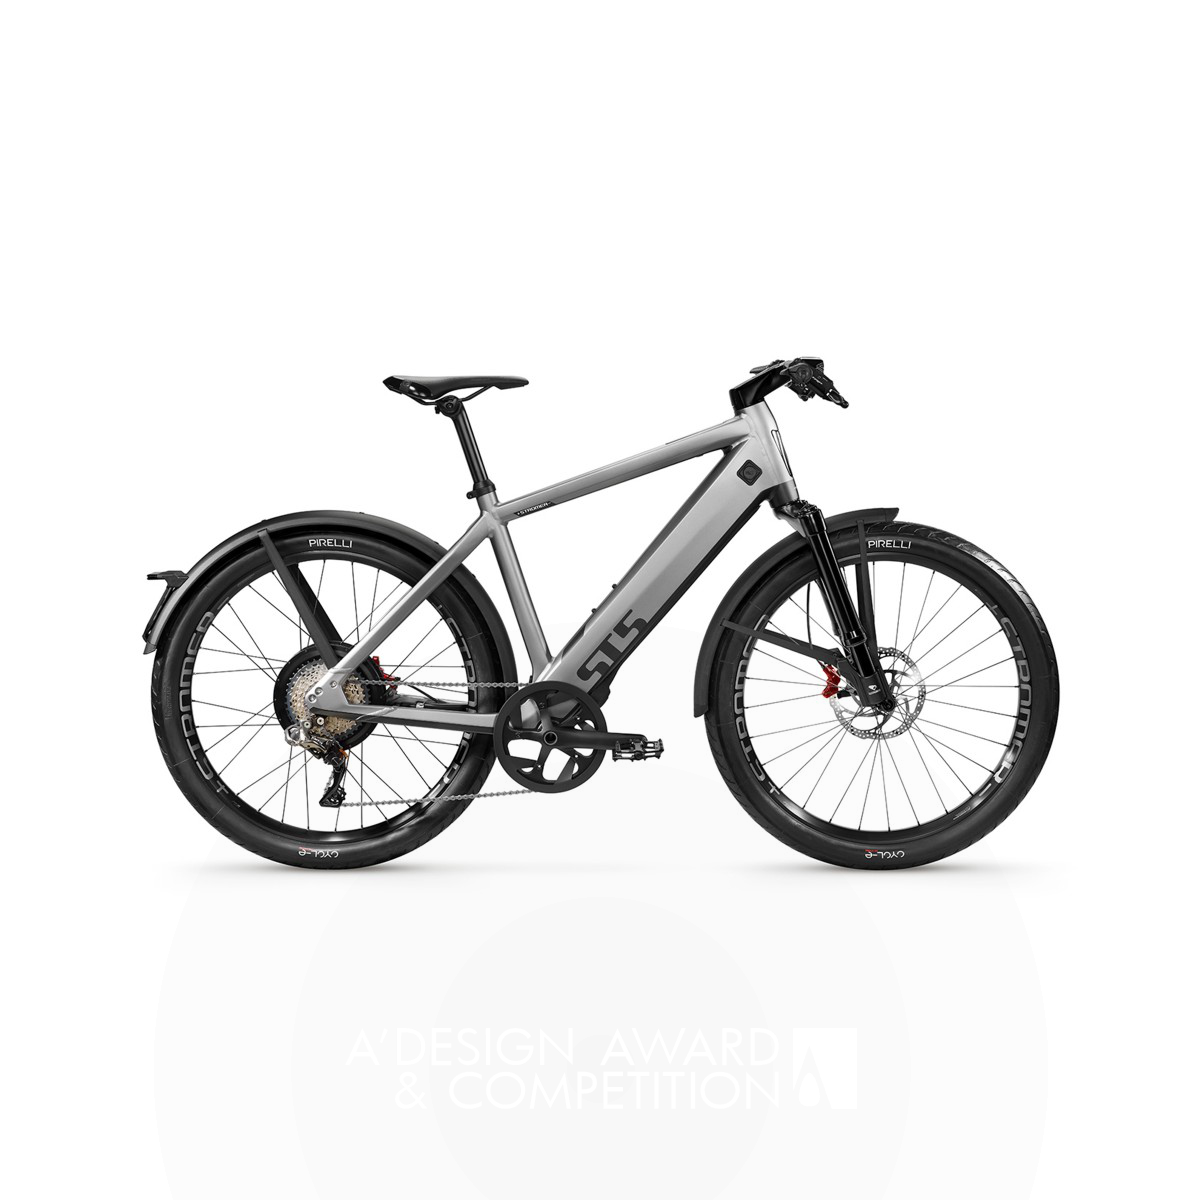 Stromer ST5: Redefining Premium E-Bike Performance